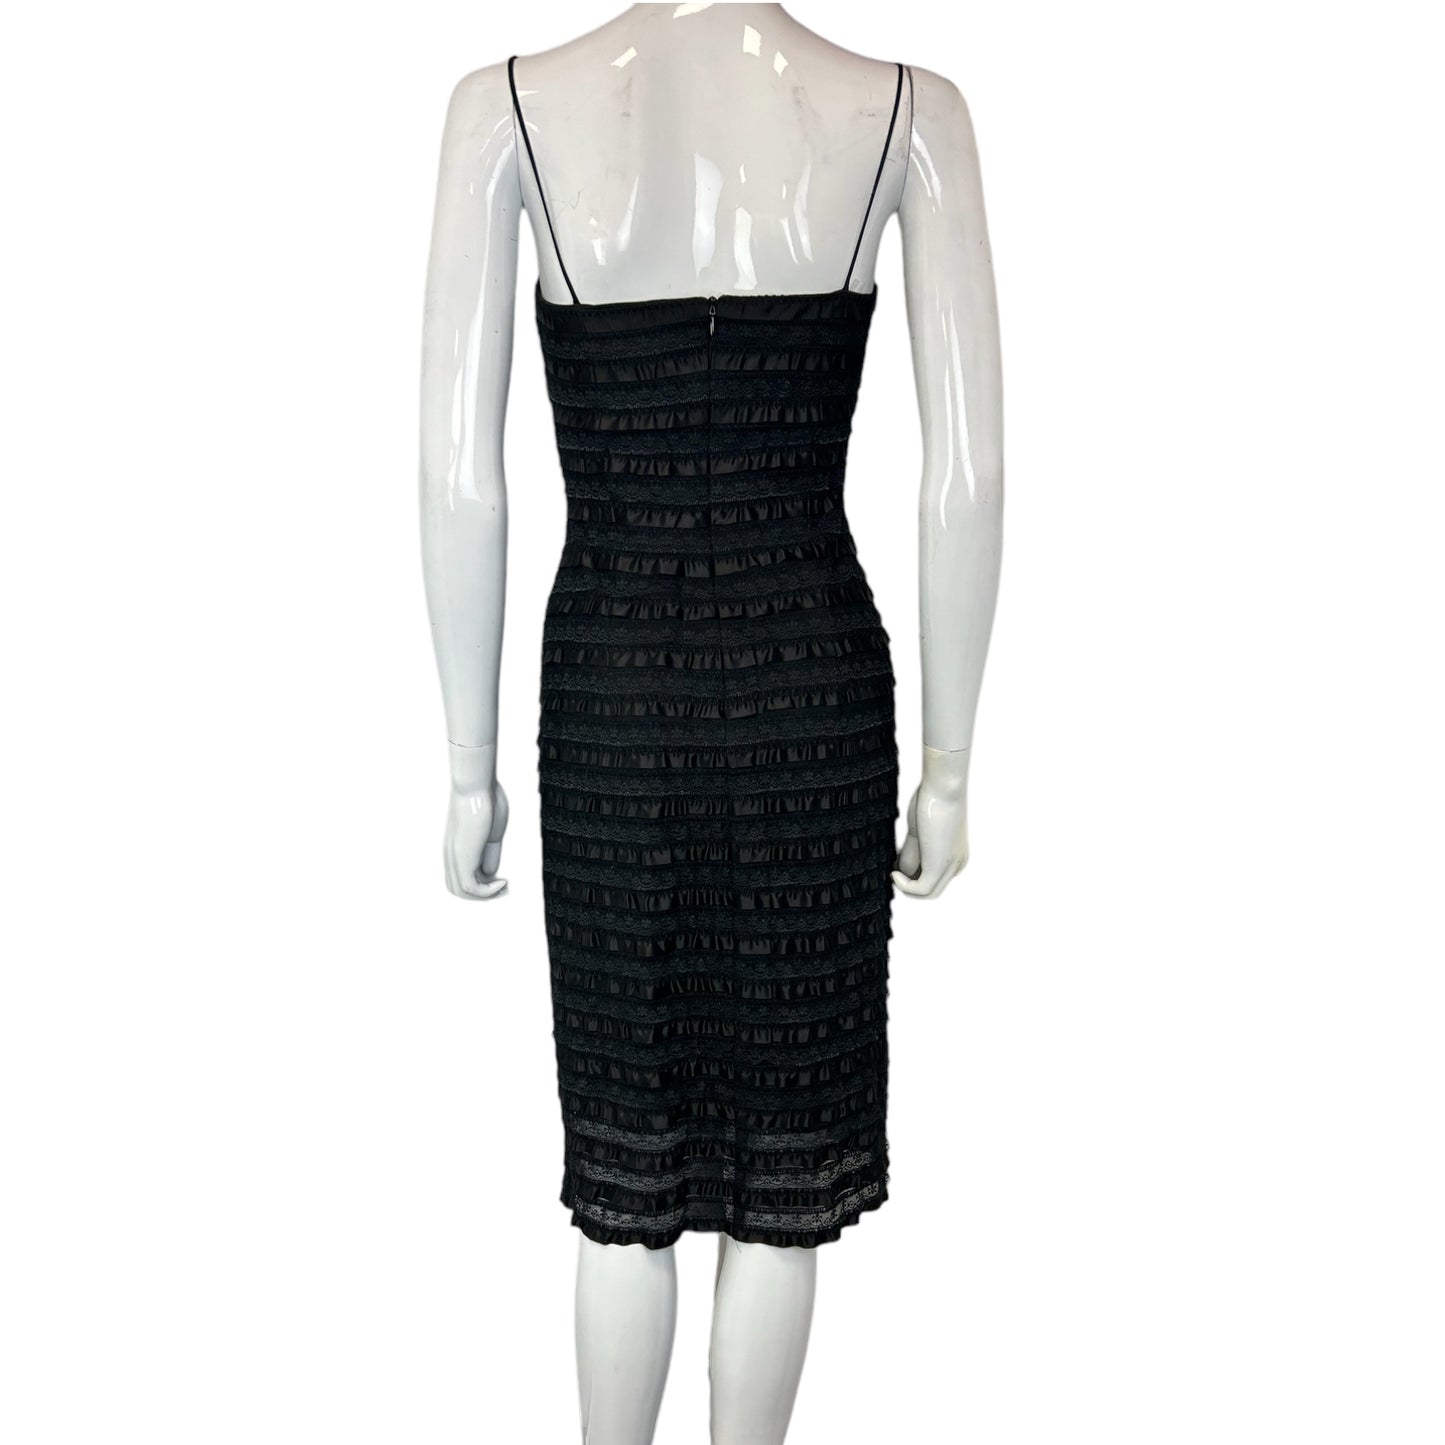 Js Collection Dress Size 4